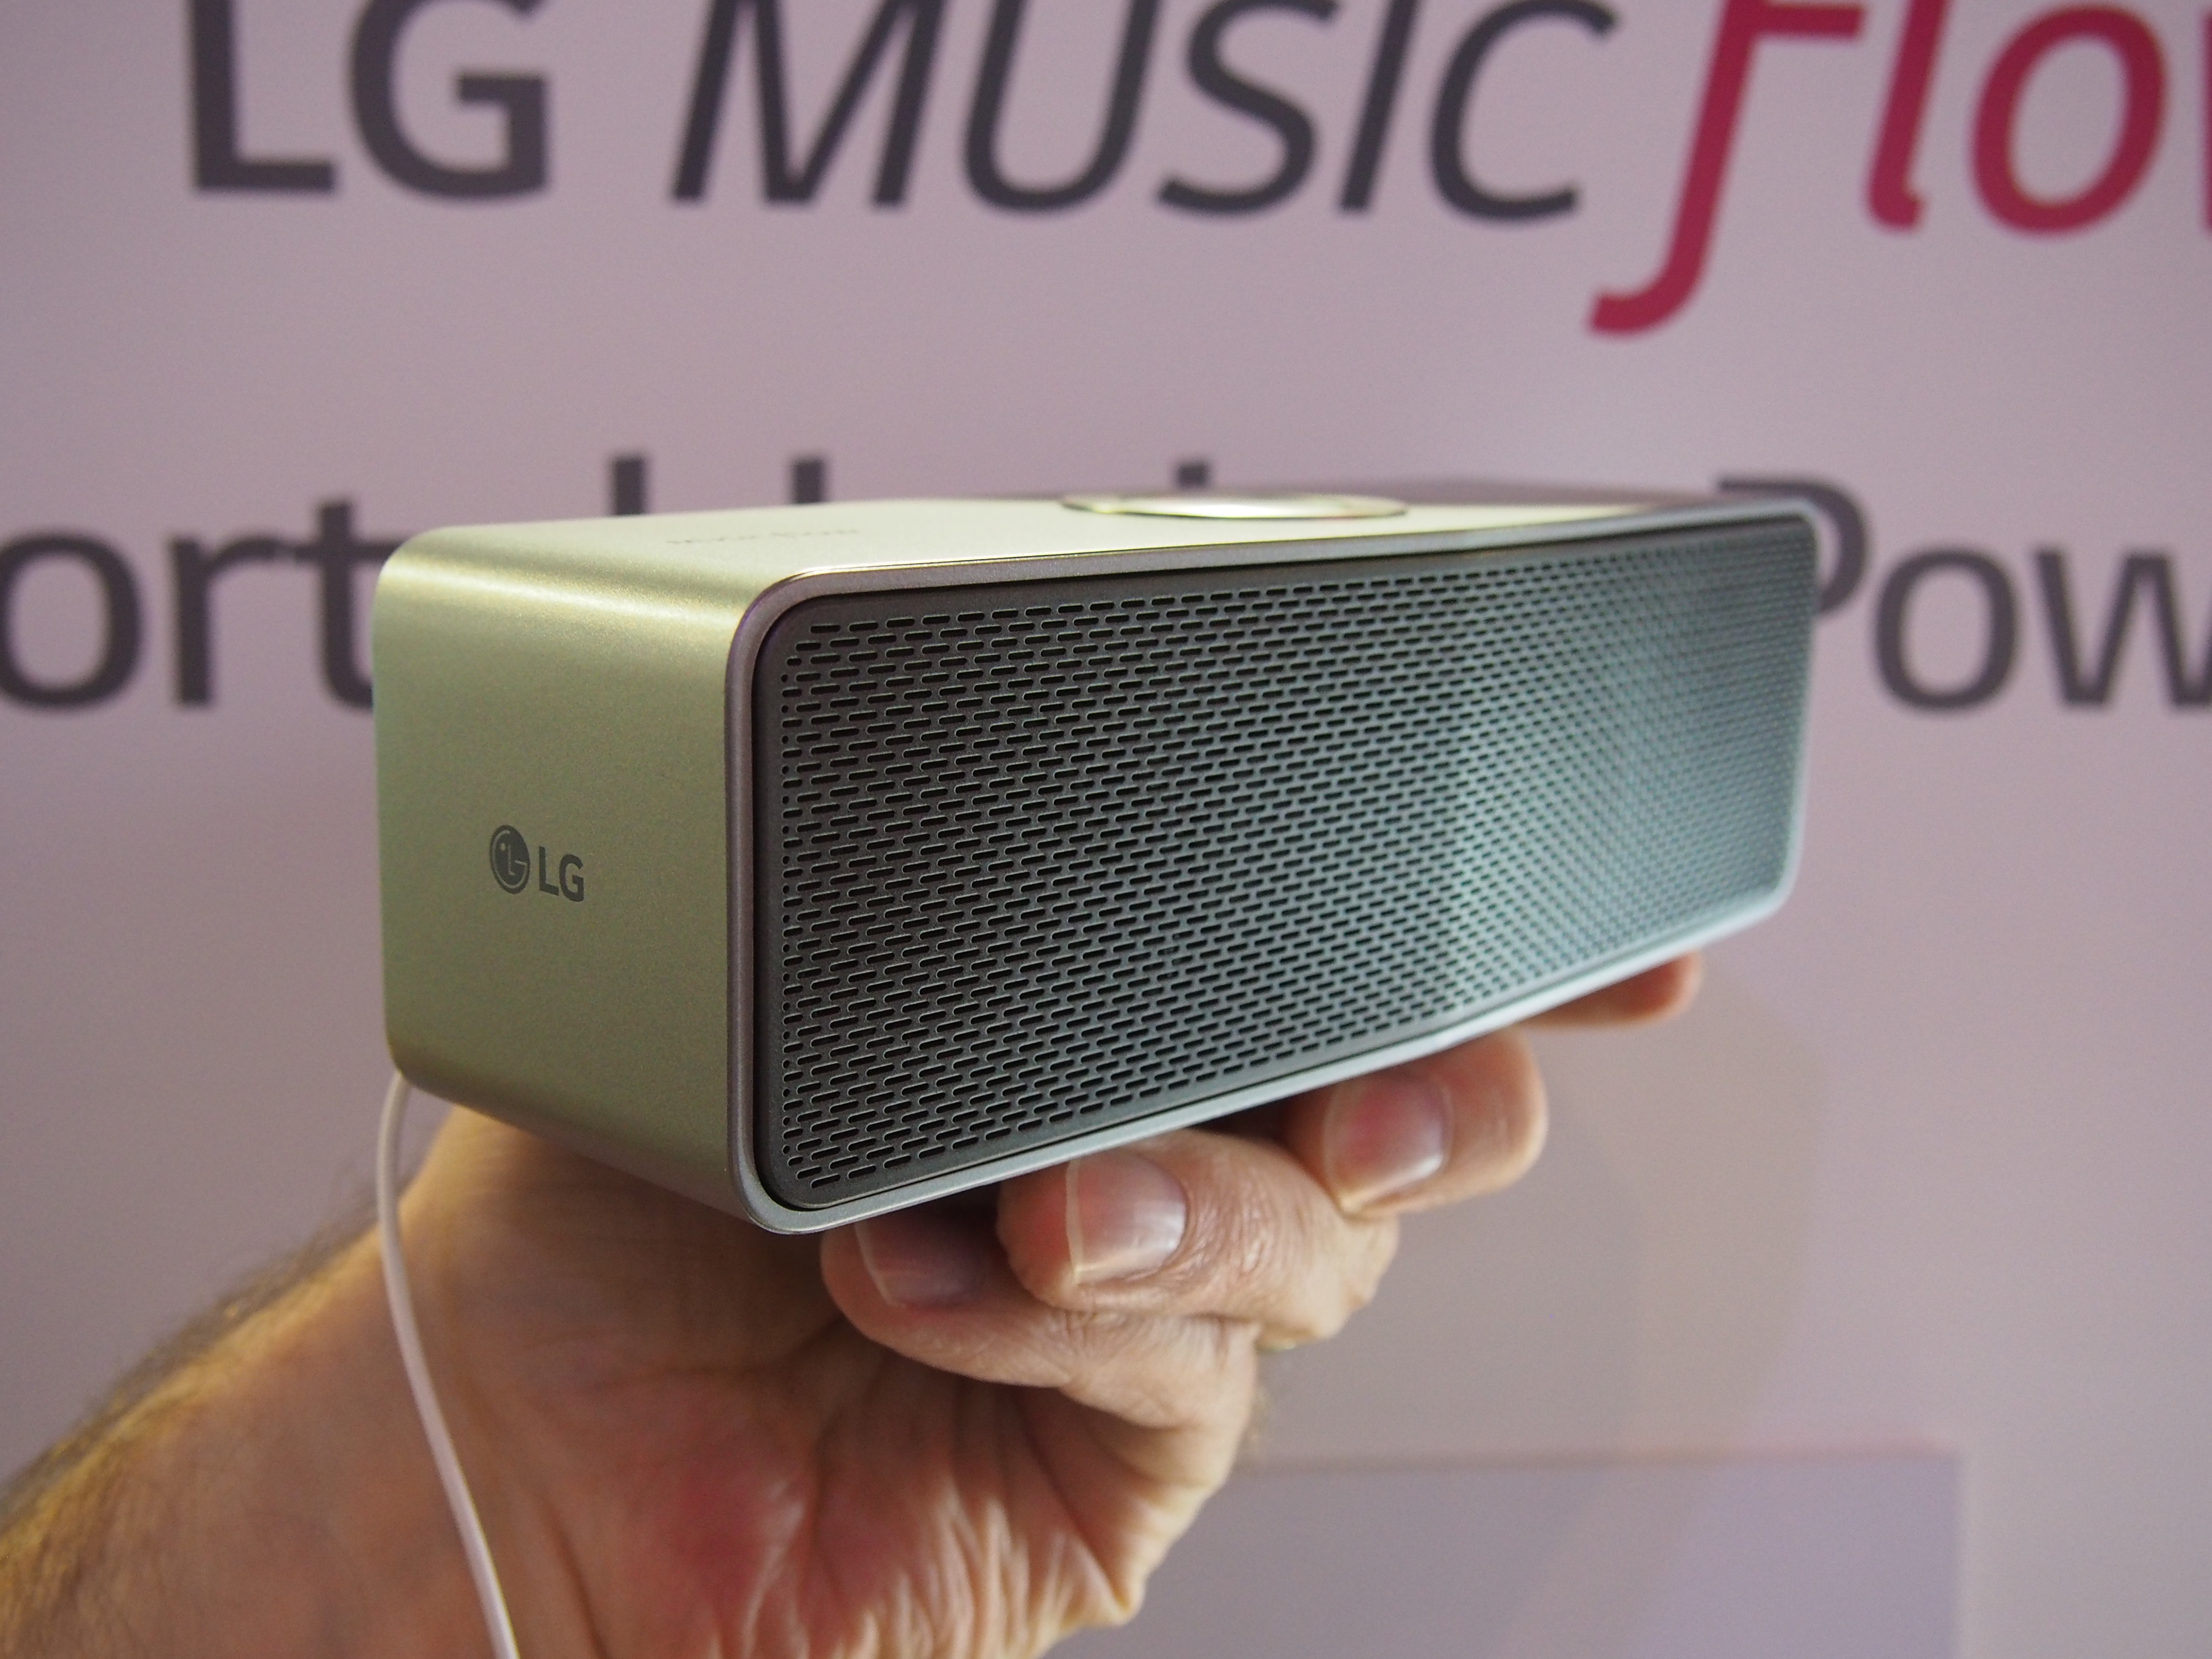 LG To Introduce Music Flow Bluetooth Speakers In Kenya